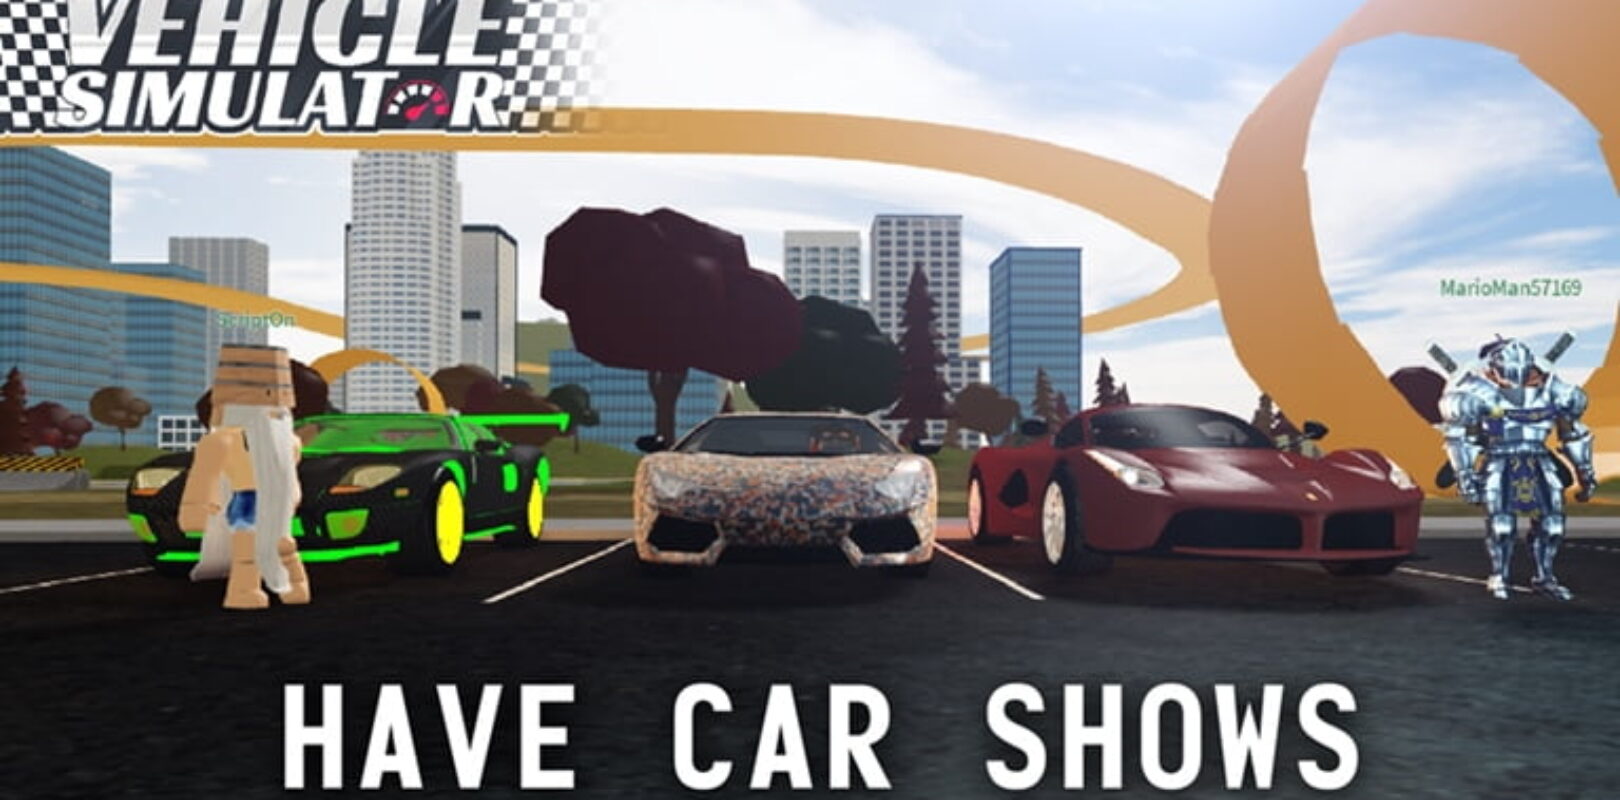 Vehicle Simulator Codes 2020 Pivotal Gamers - roblox vehicle simulator most of the working codes 2019 youtube